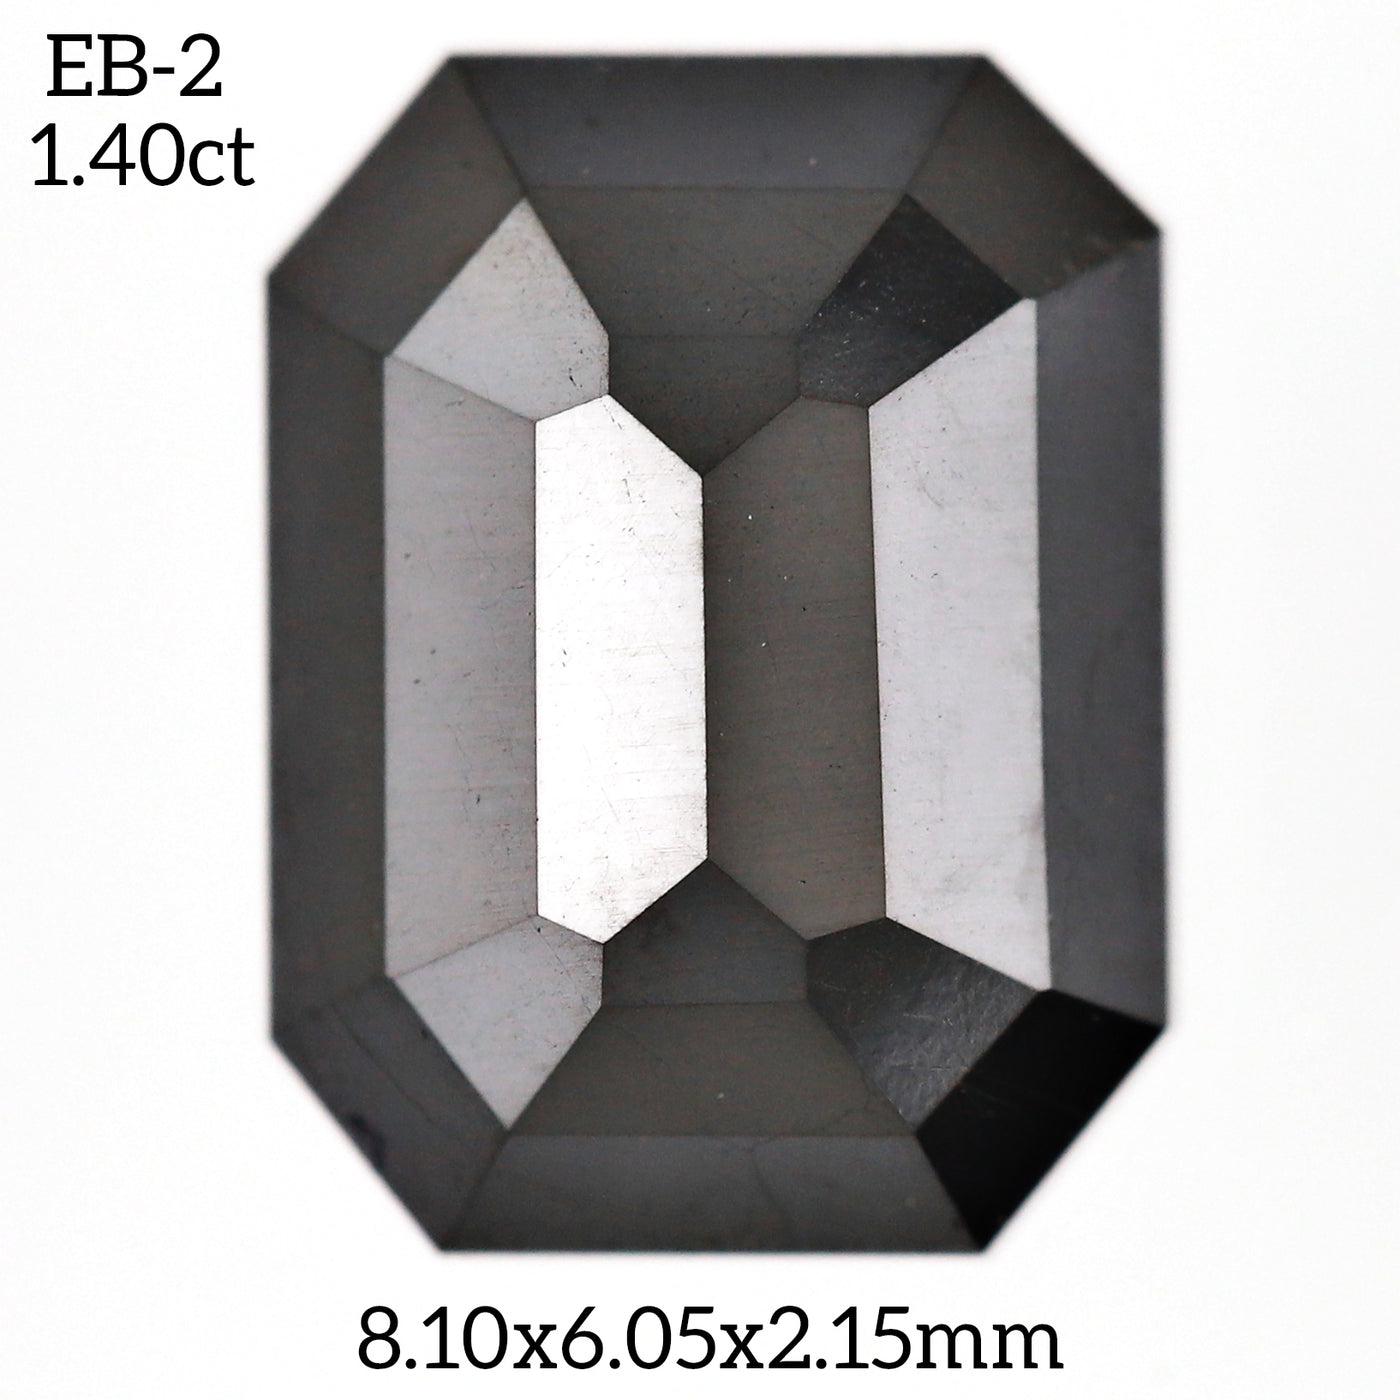 EB2 - Black emerald diamond